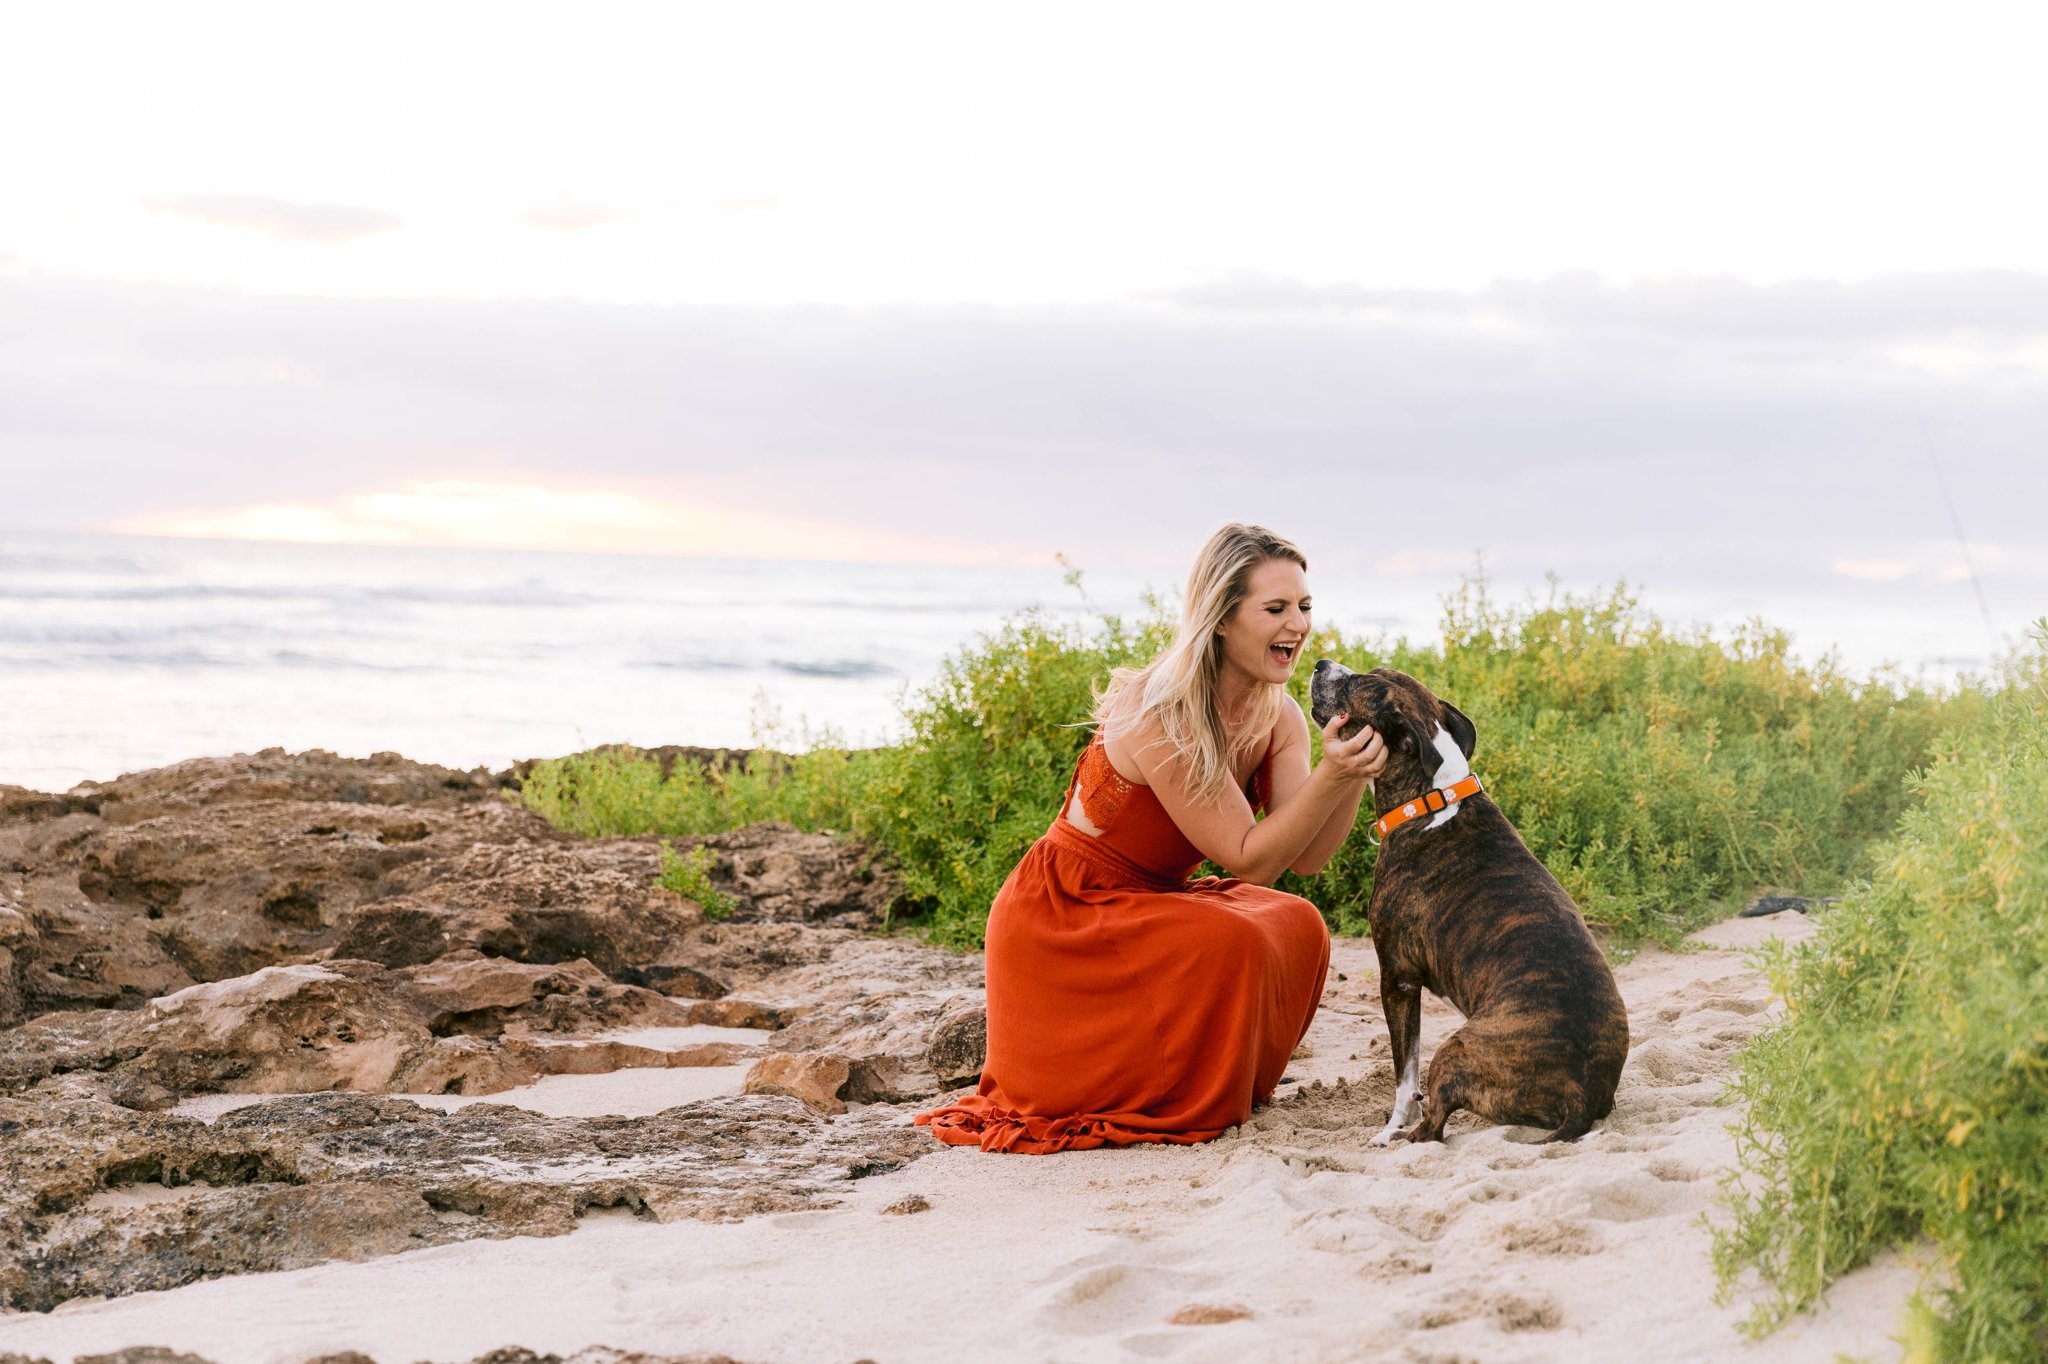 Sunset Family Photographer in Oahu Hawaii - Barbers Point Beach Park 